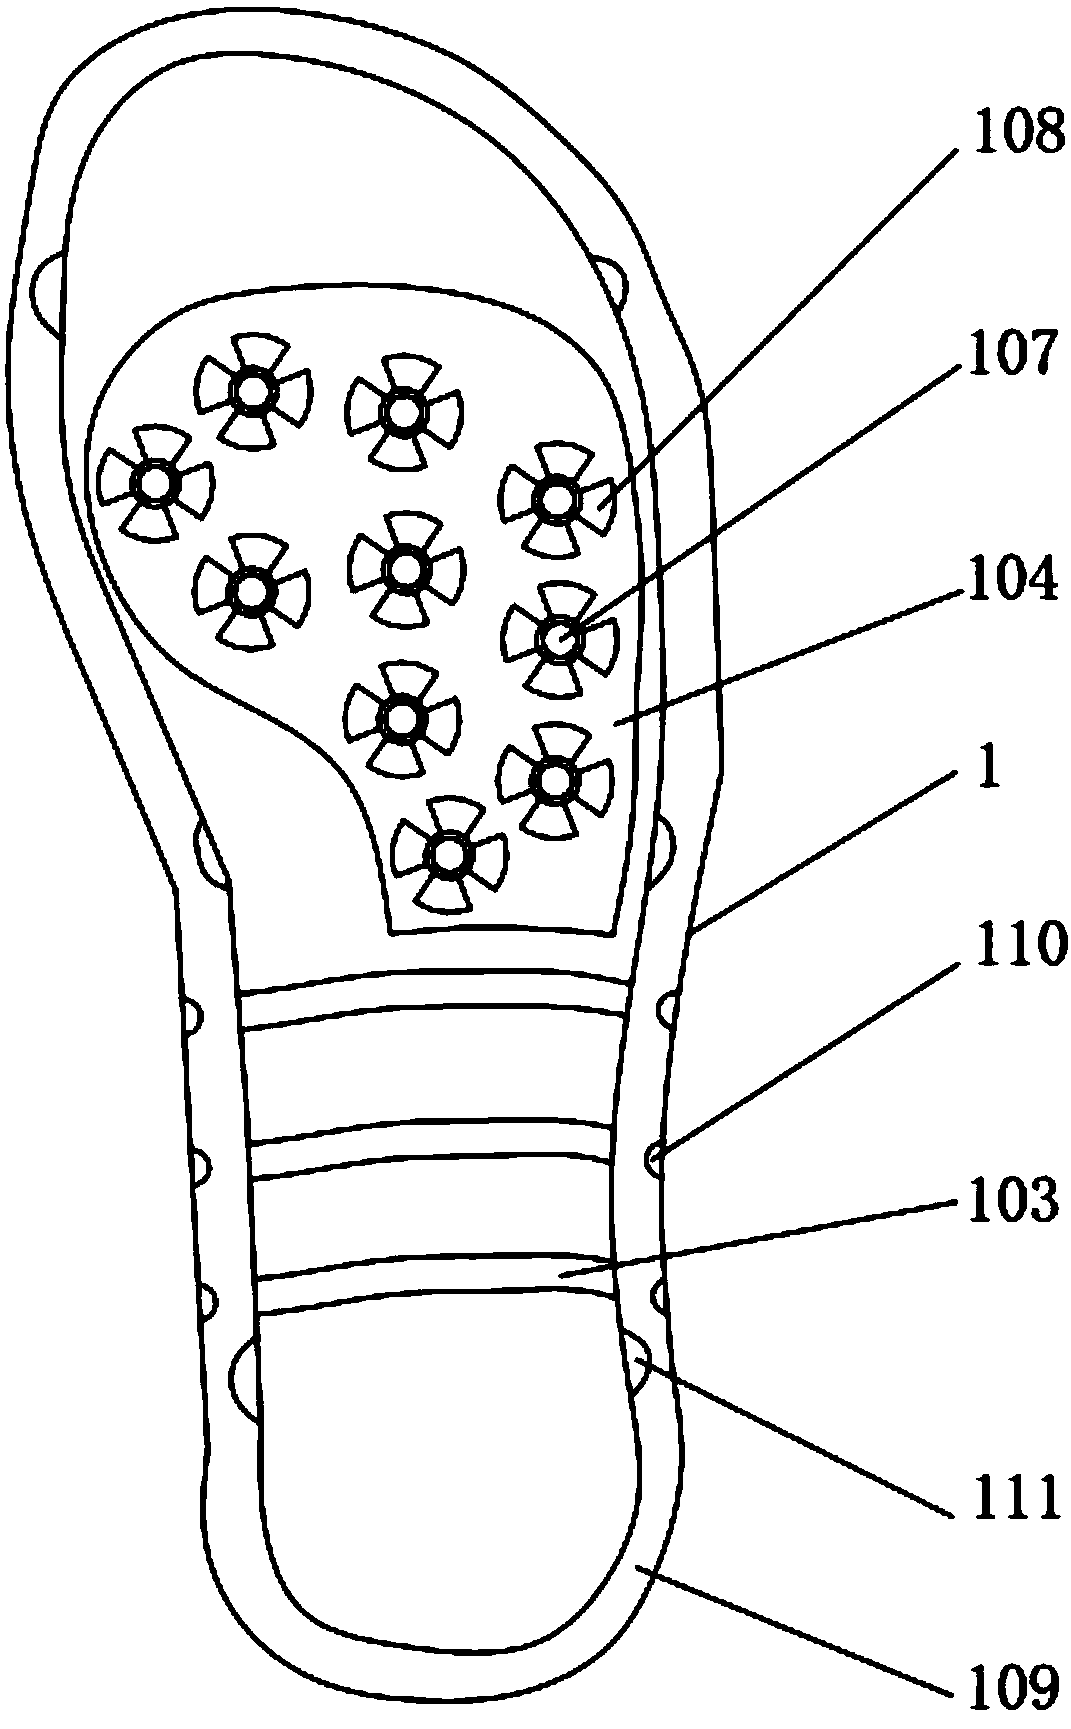 Shoe midsole structure suitable for sports